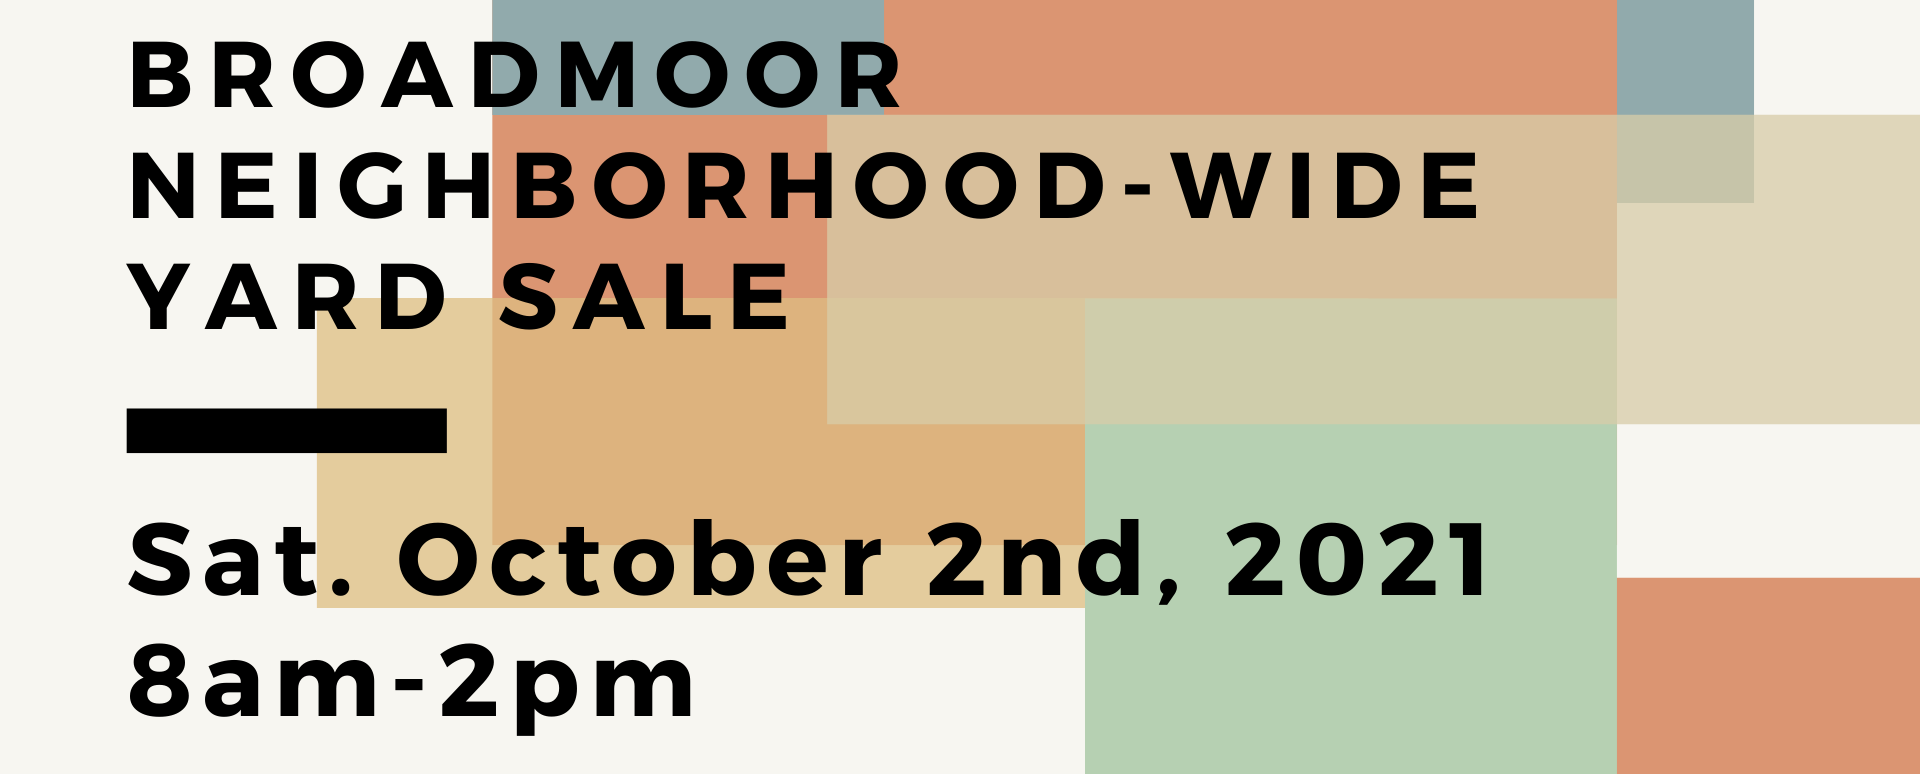 Broadmoor Neighborhood-Wide Yard Sale Saturday October 2nd 2021 8am-2pm